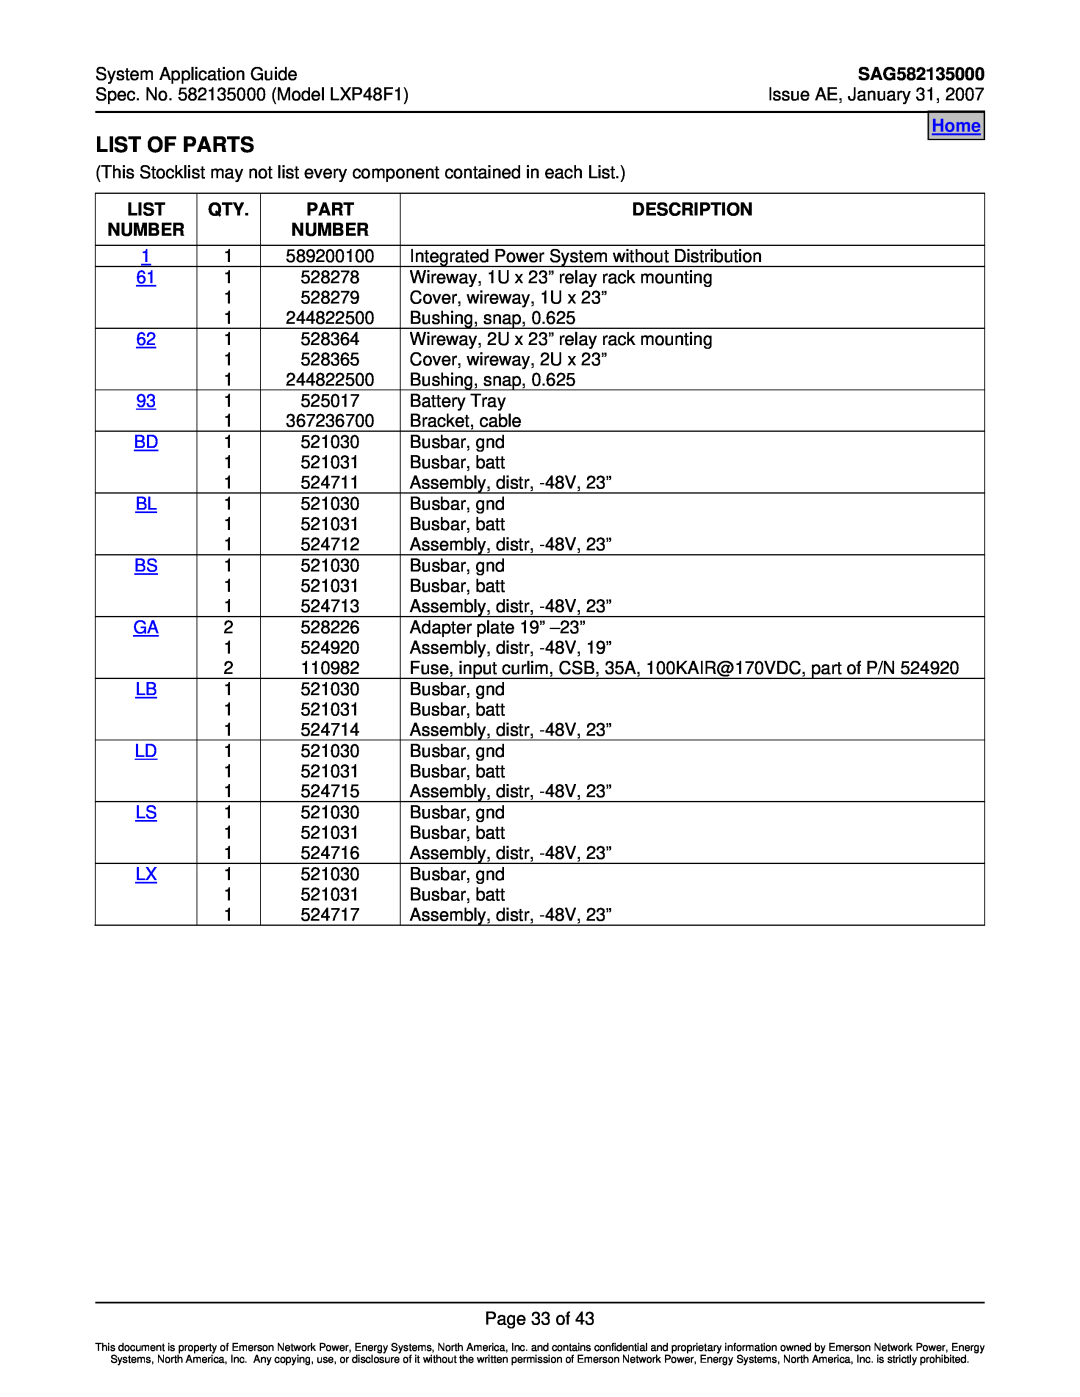 Emerson LXP48F1 manual List Of Parts, Description, Number, SAG582135000, Home 